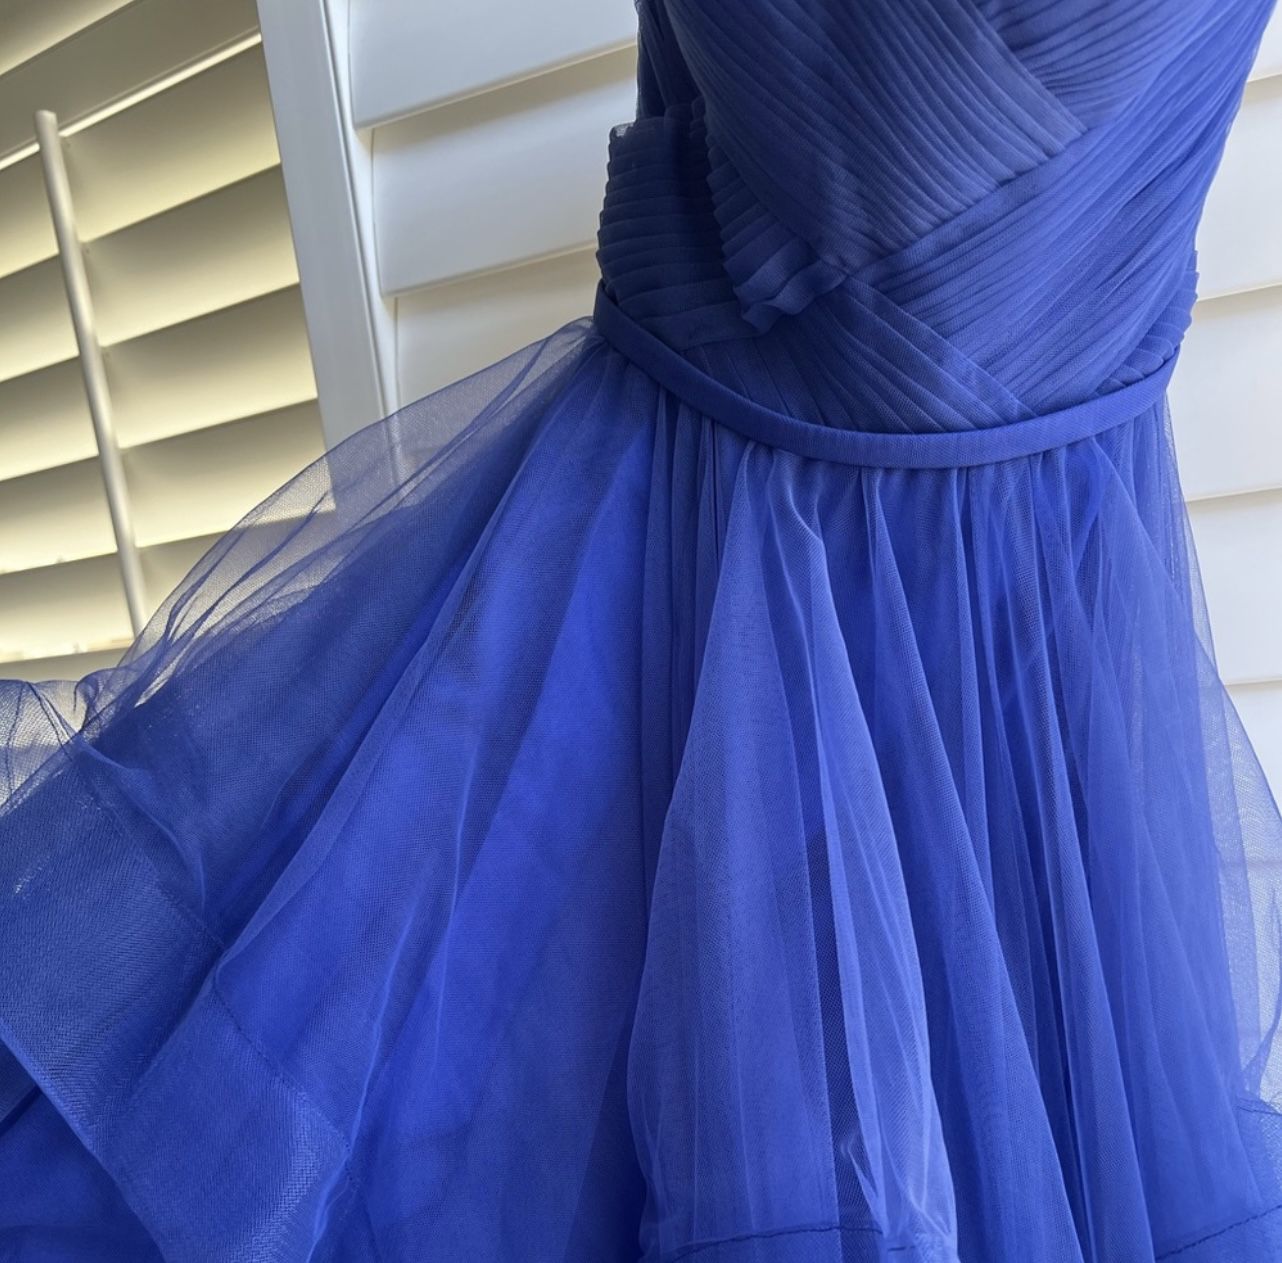 Size 0  | BASIX BLACK LABEL | Royal Blue Strapless Ball Gown